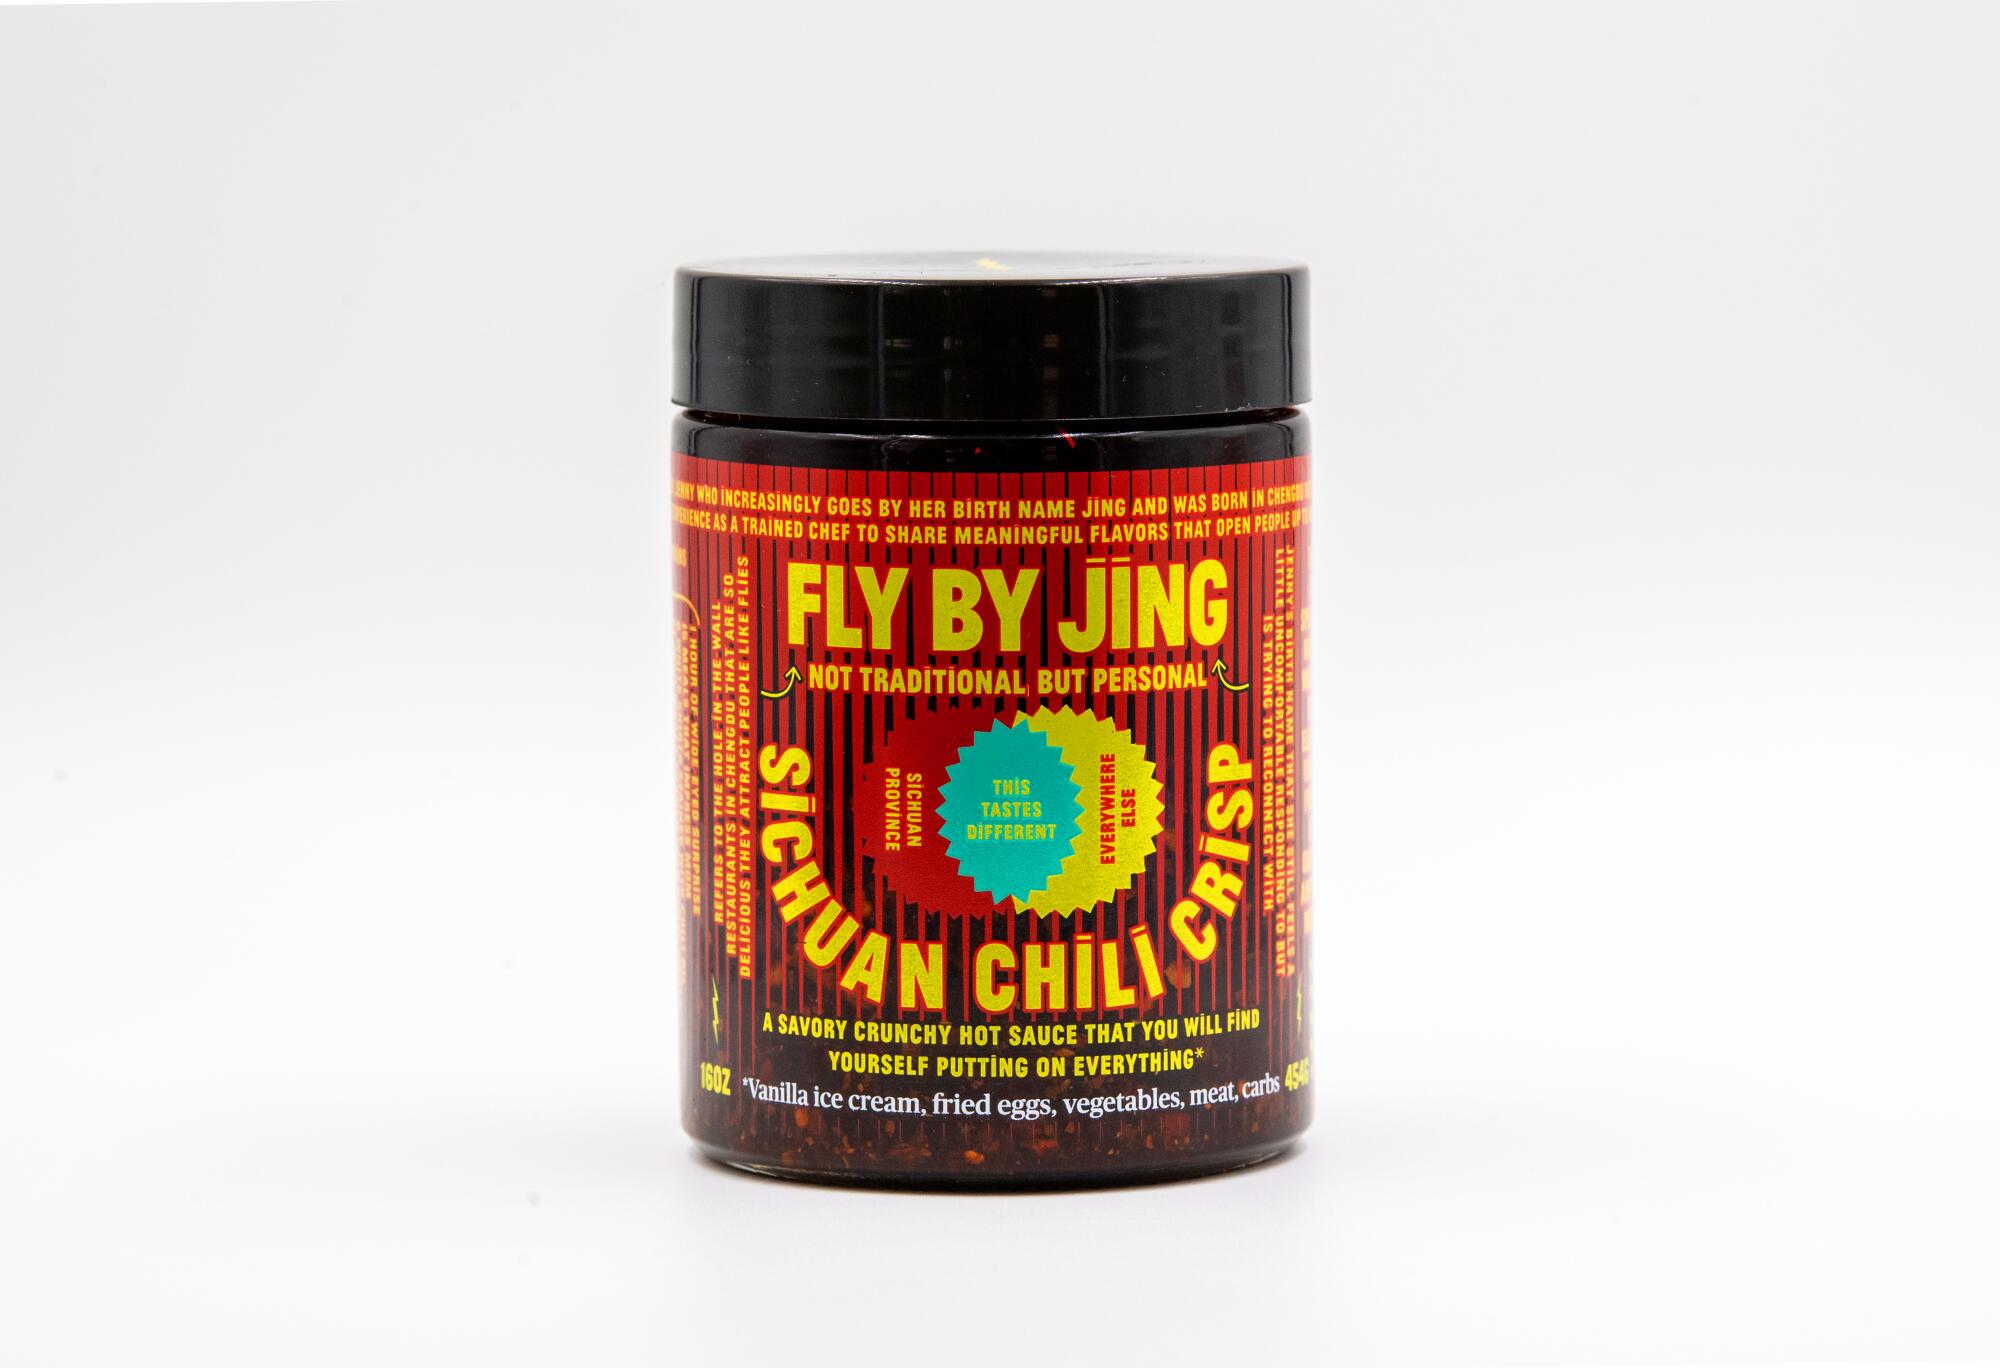 A jar of Fly by Jing Sichuan Chili Crisp by Jing Gao.